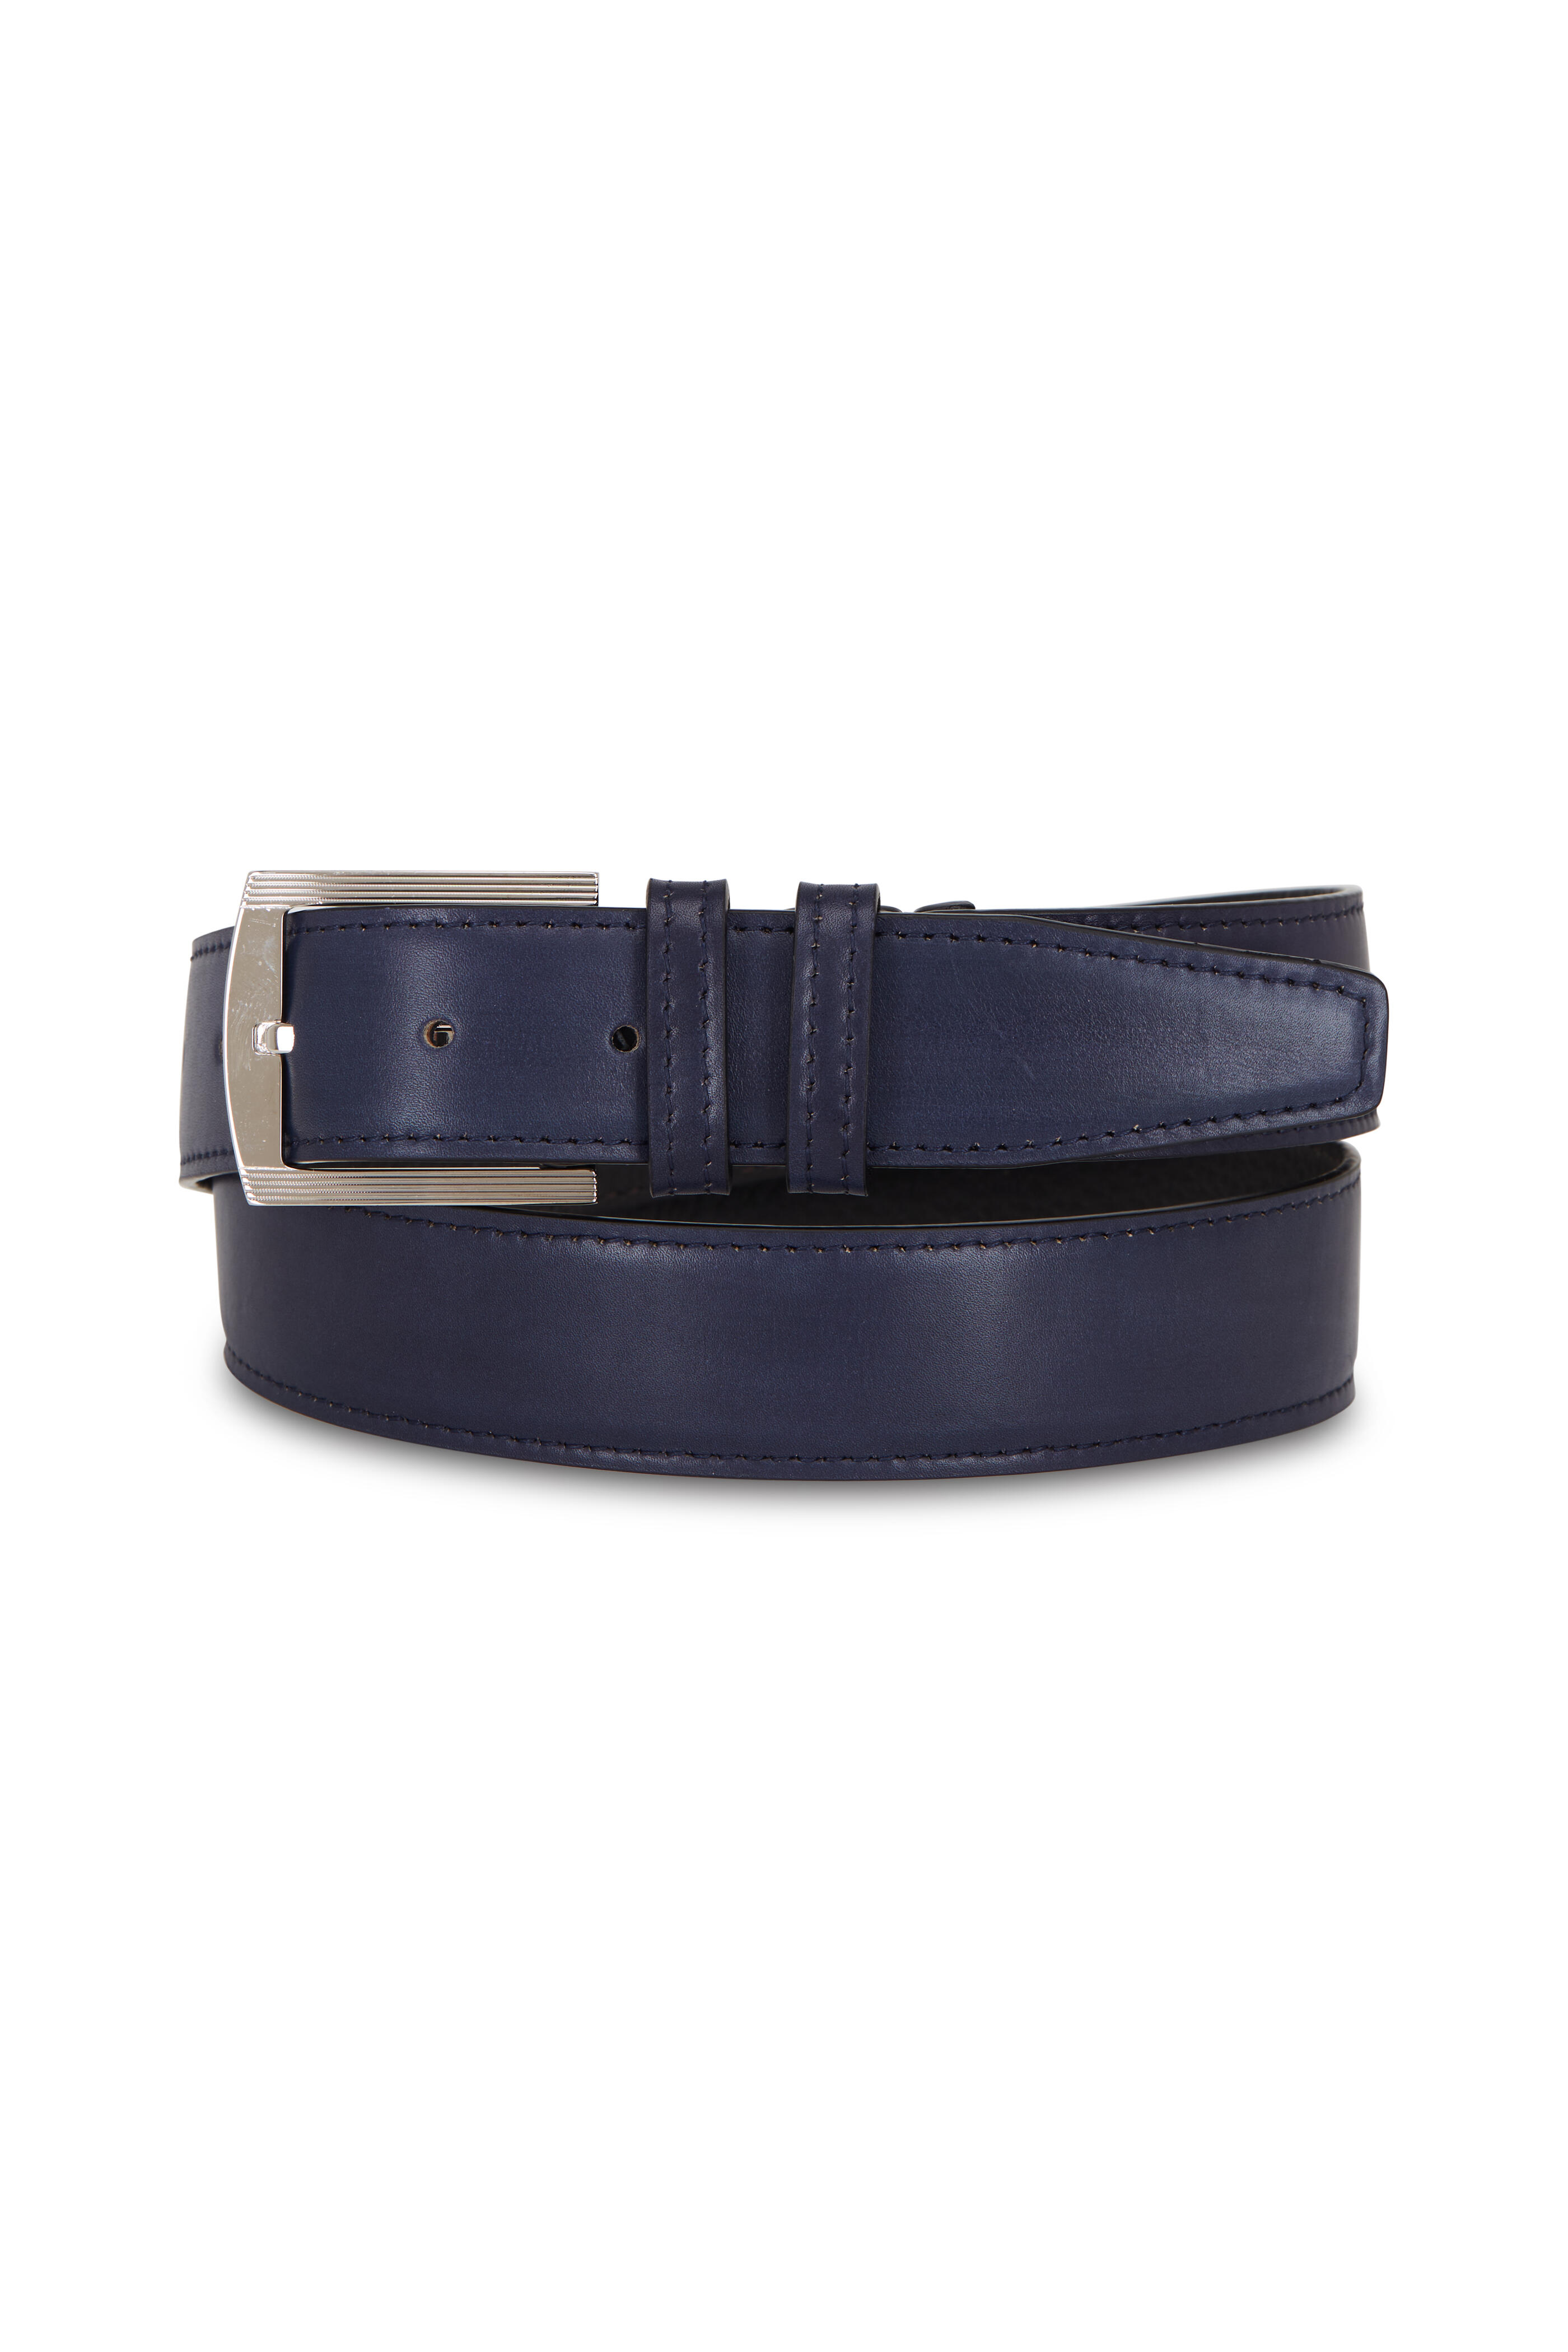 Kiton - Navy Leather Belt | Mitchell Stores